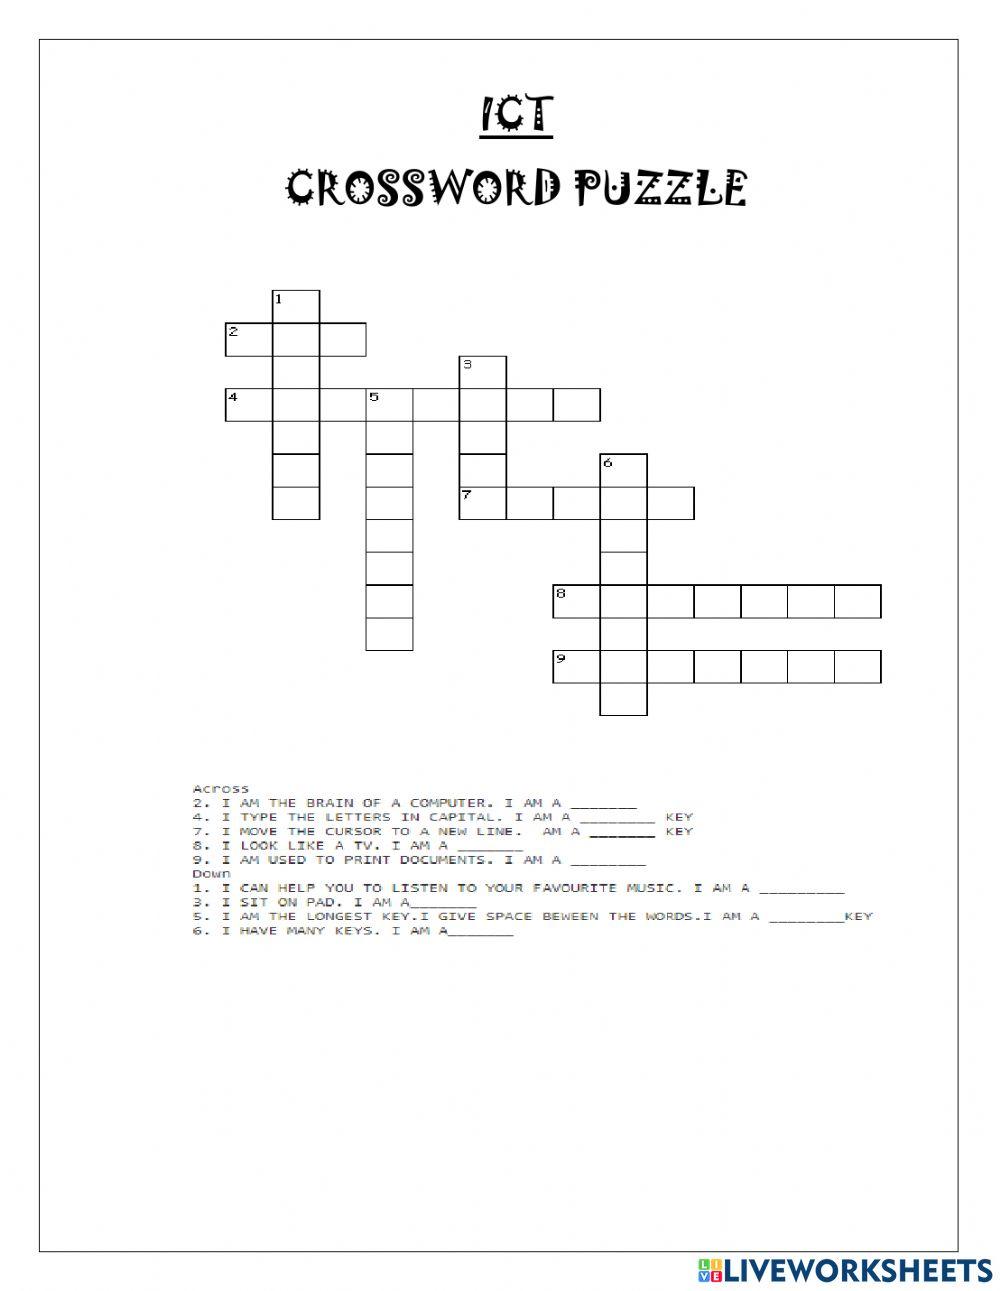 ICT Crossword